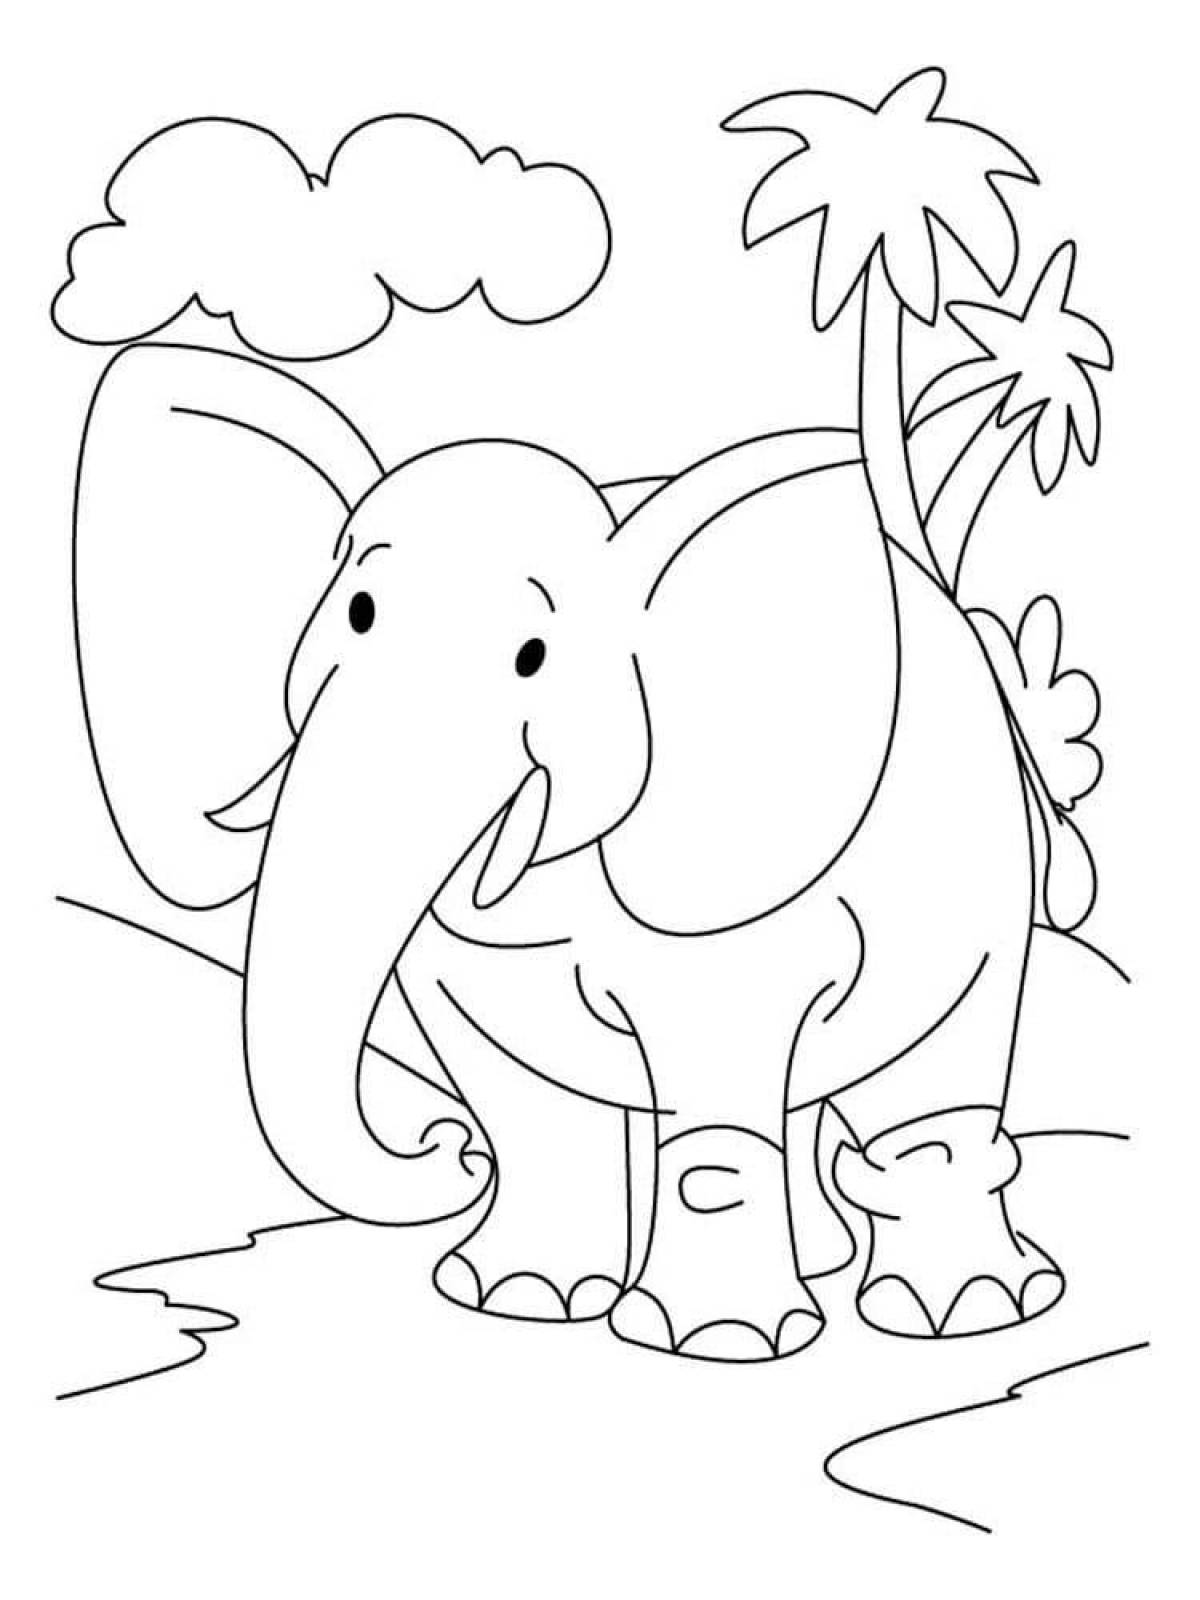 Изысканная раскраска слона